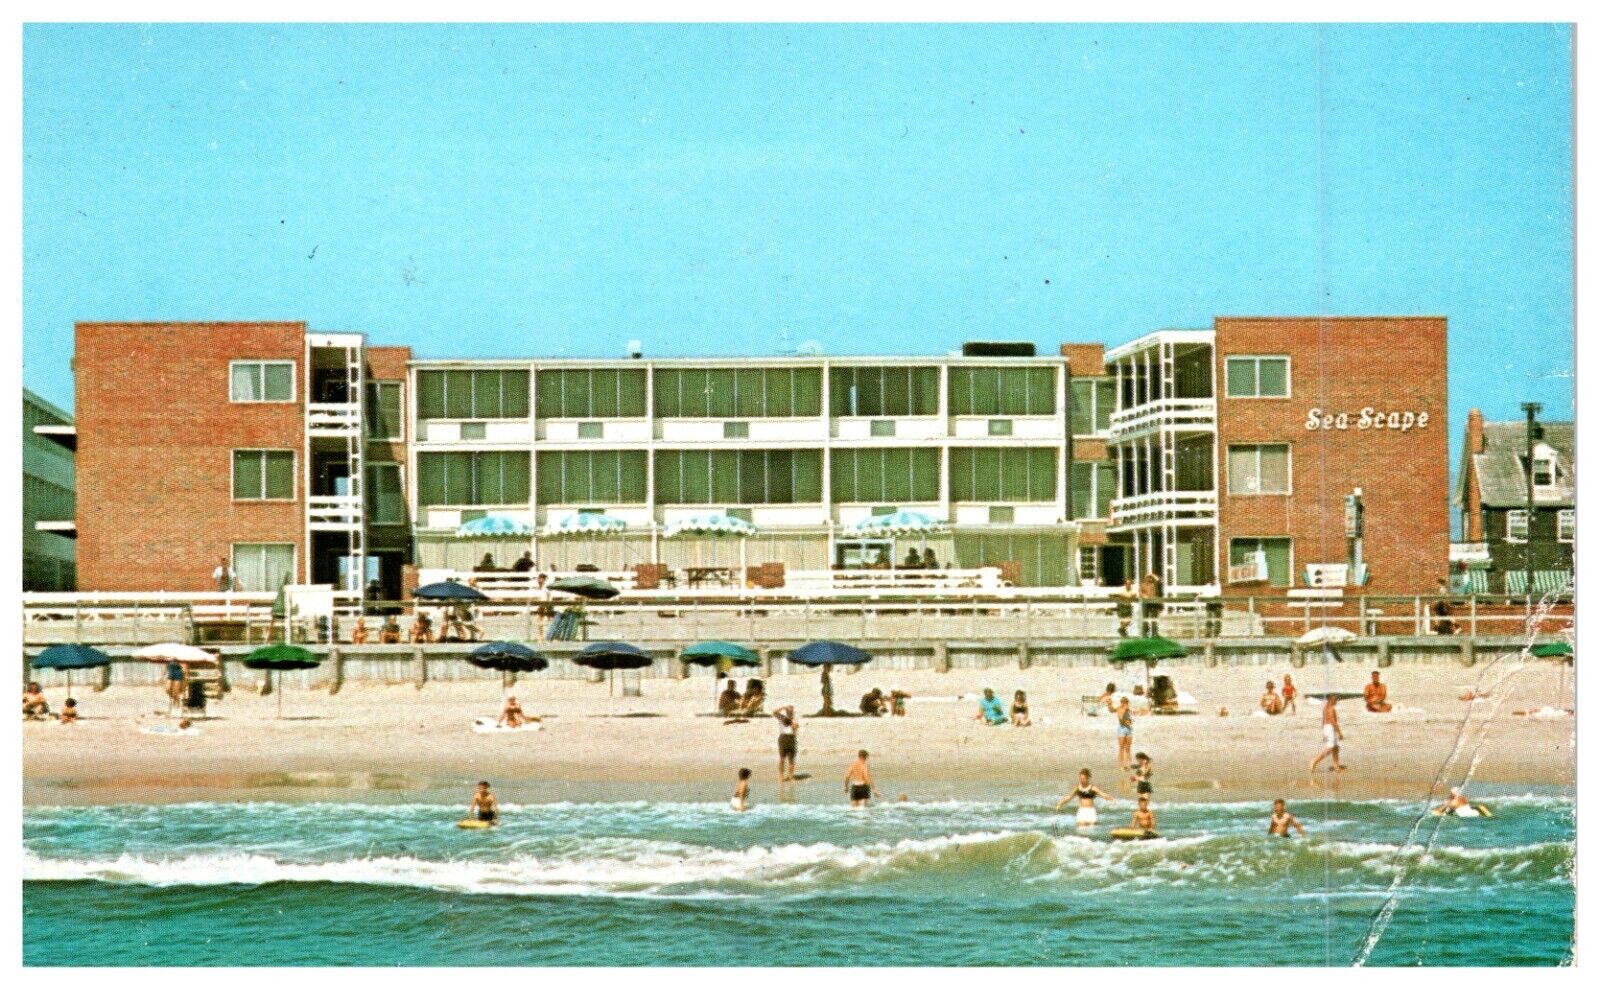 Ocean City Maryland Sea Scape Motel Beach People 1969 Vintage Postcard-K2-159